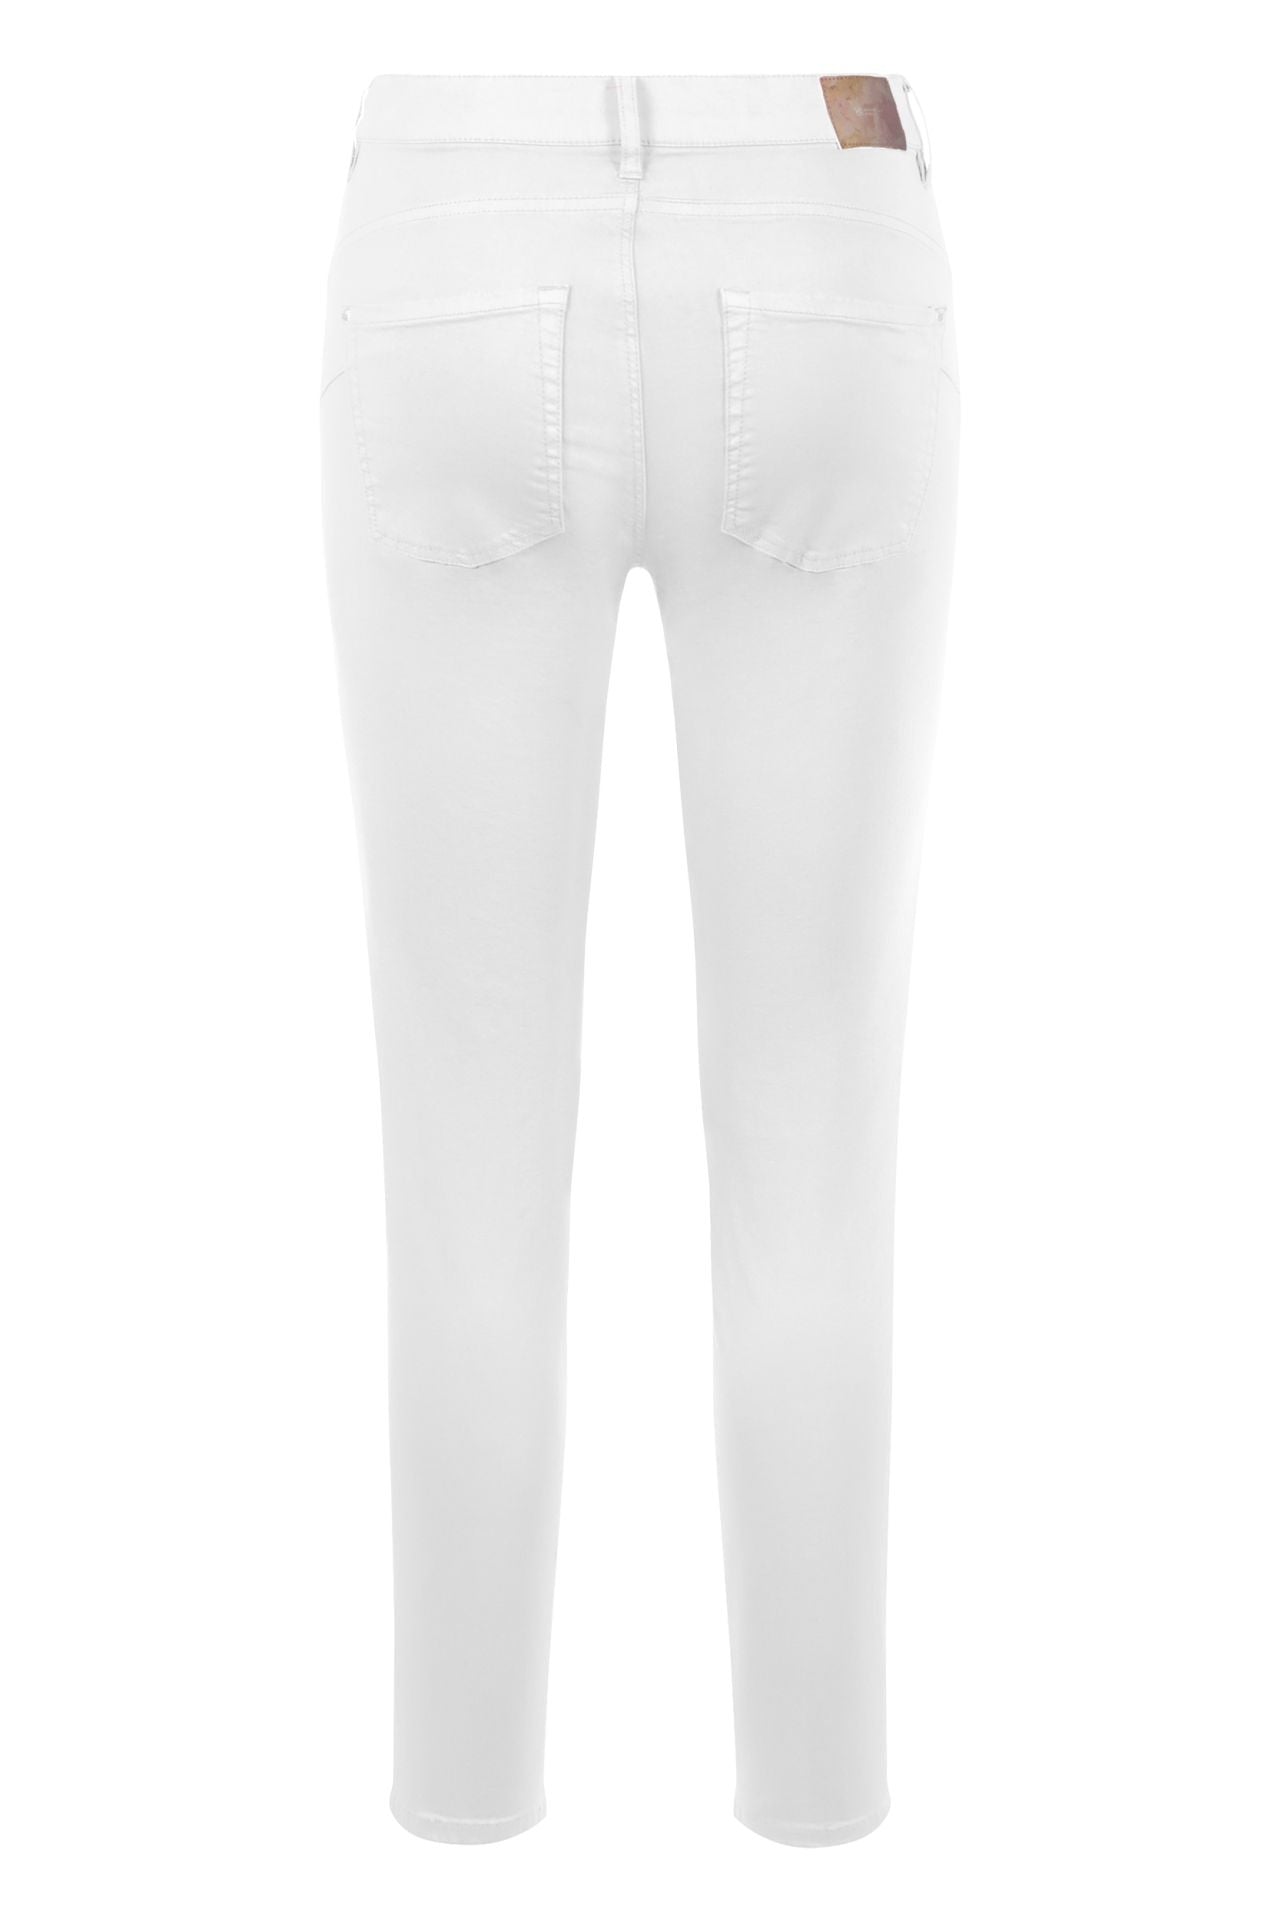 Suzy White Denim Jeans